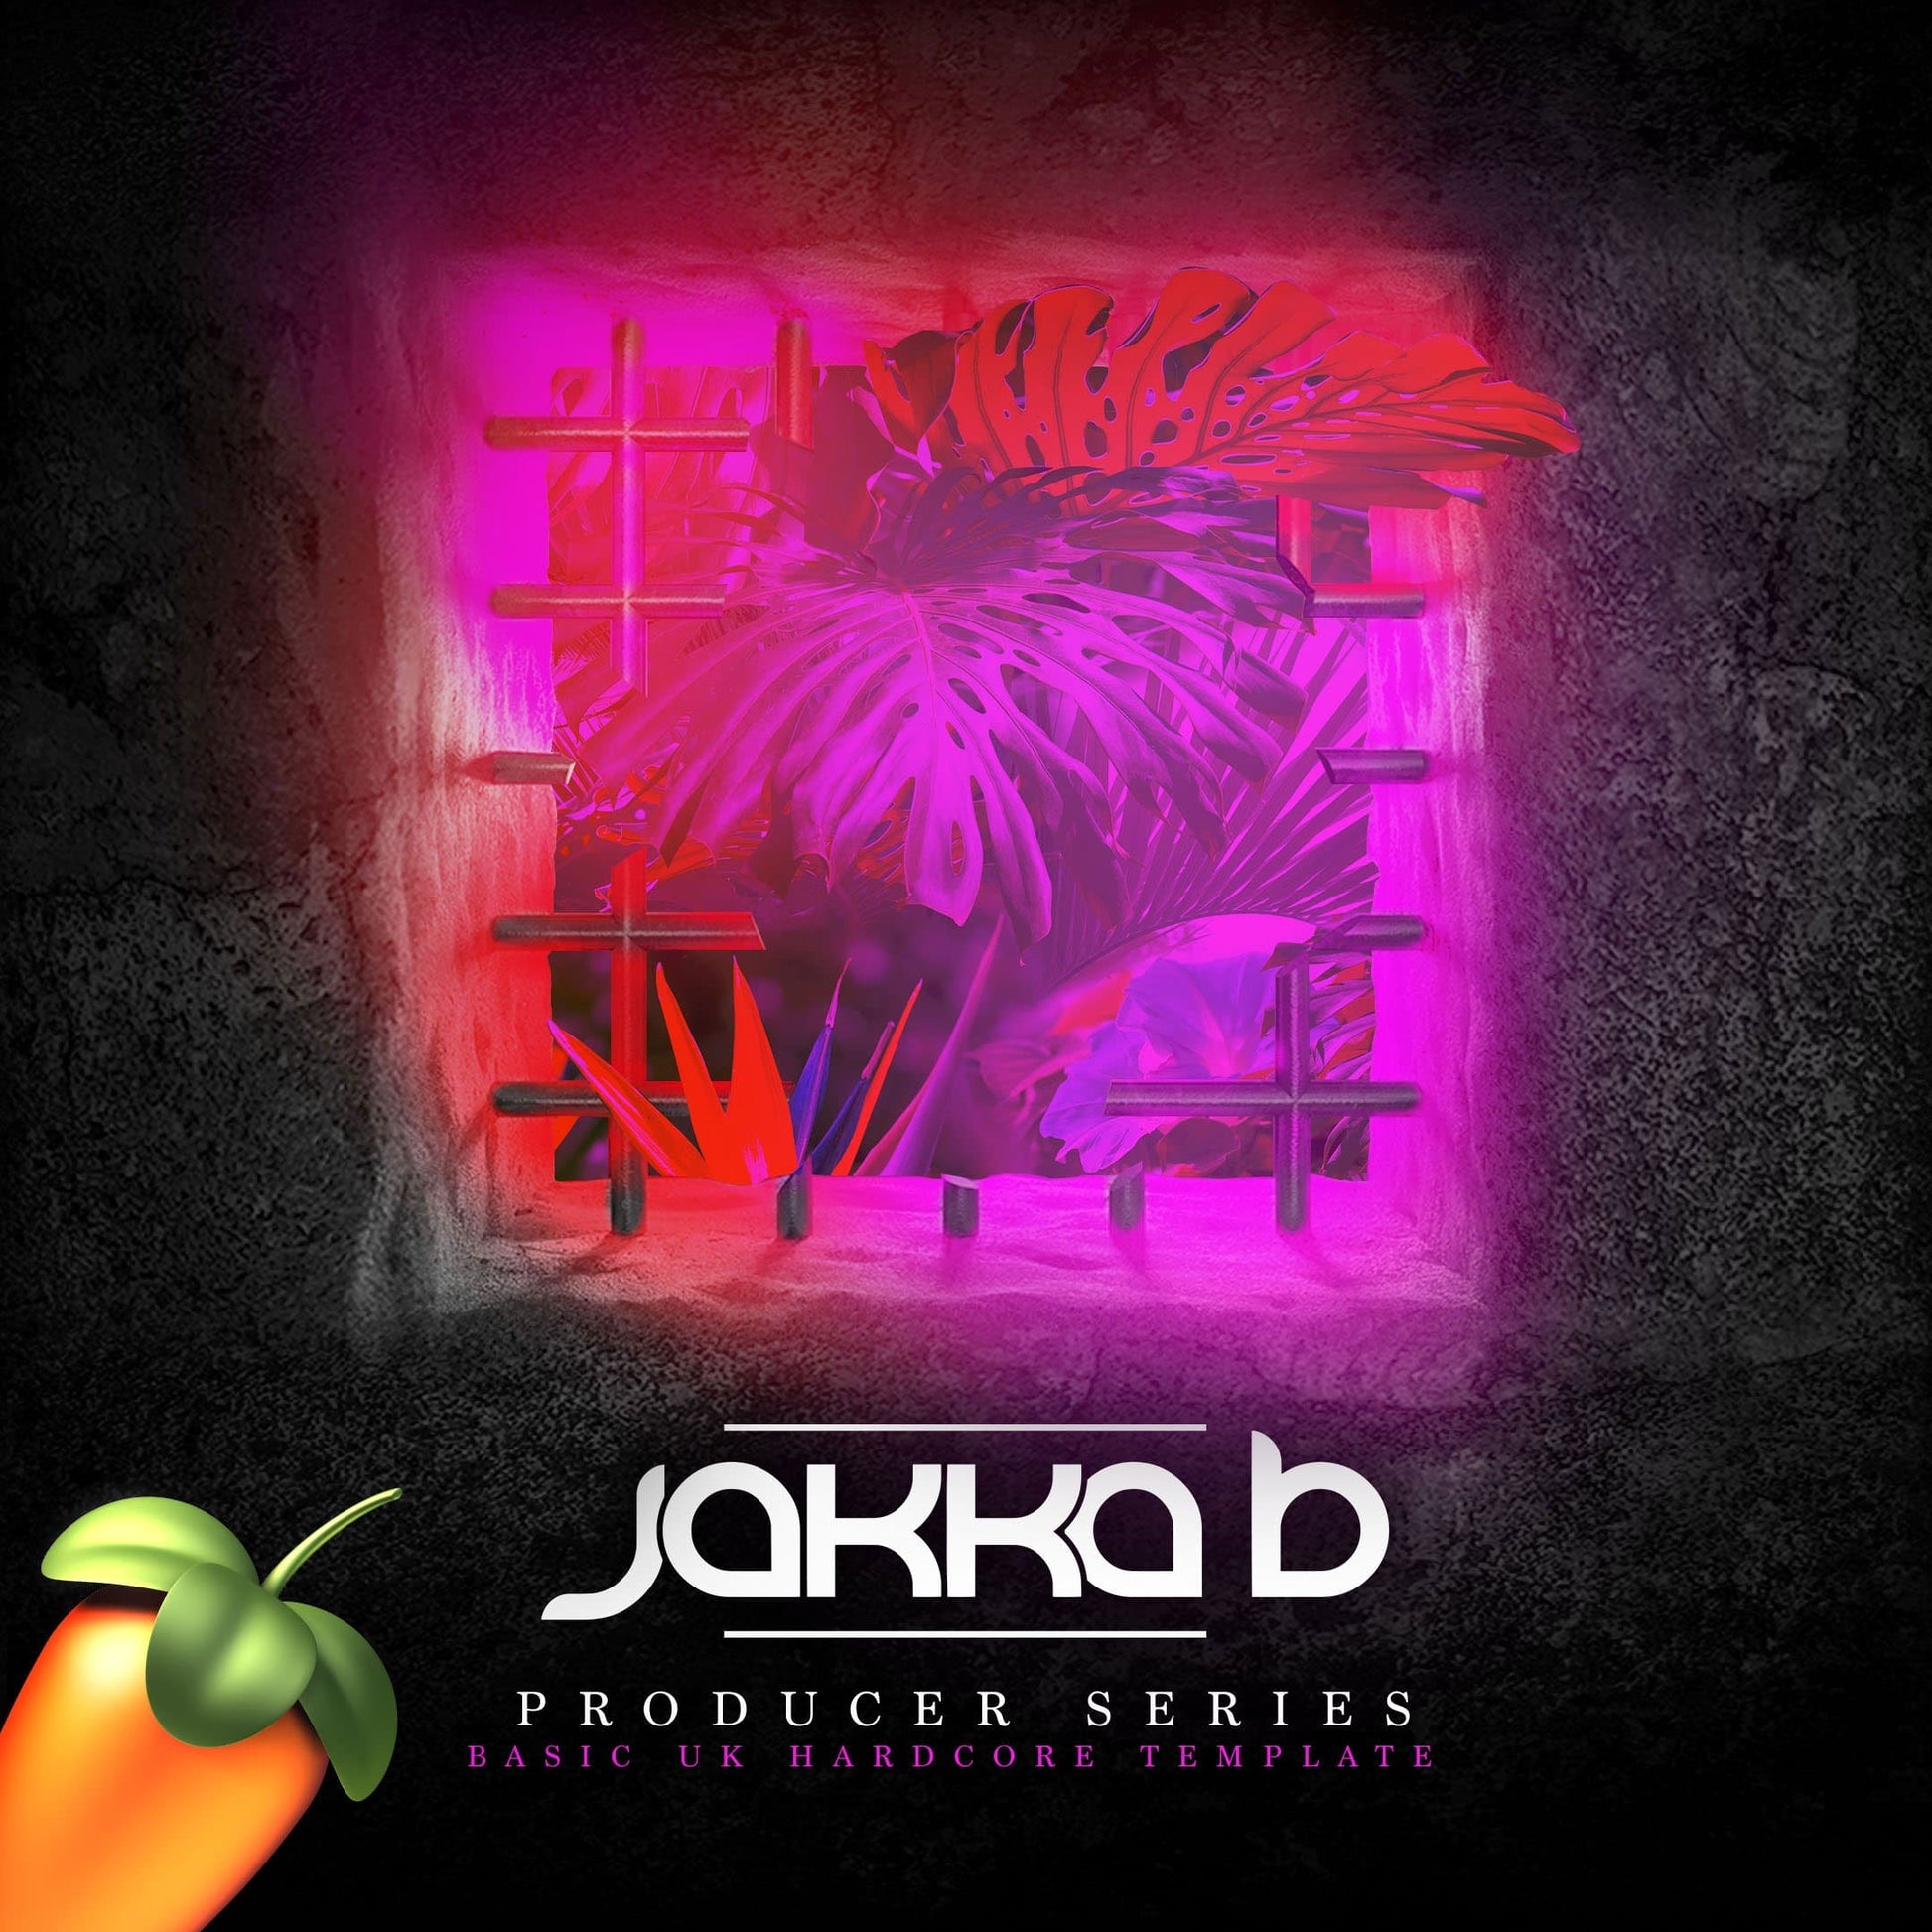 Jakka-B Producer Series: UK/Happy Hardcore template (FL Studio) - Rewired Records